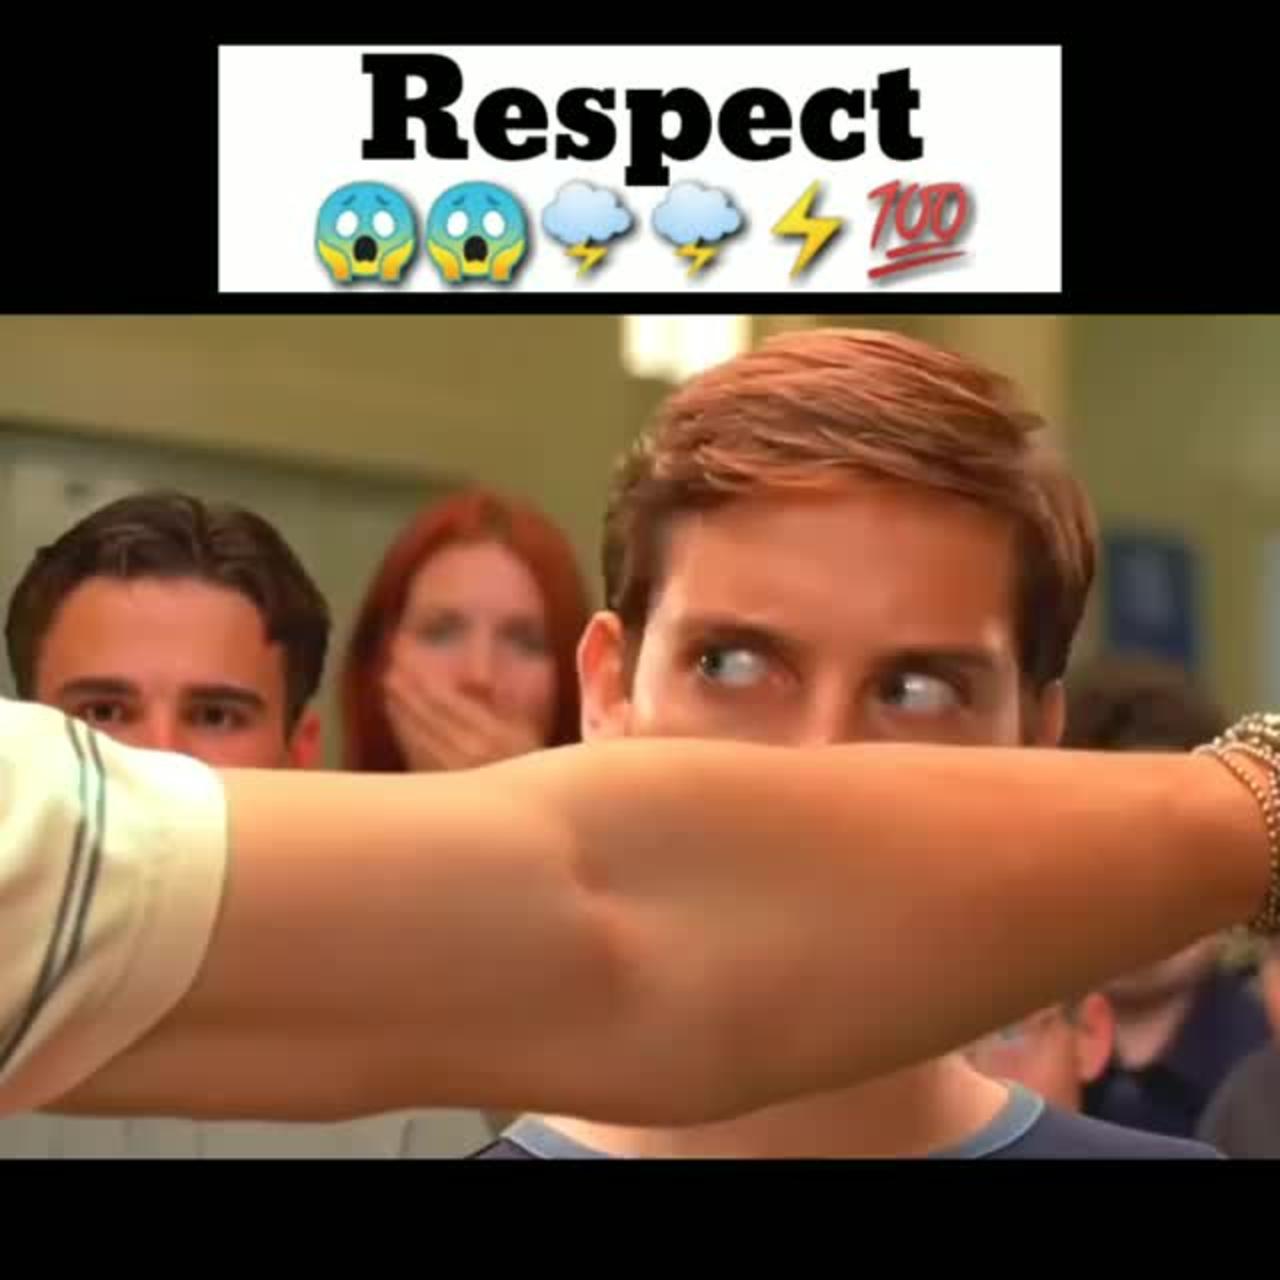 Respect 💯. (Your respect yt)